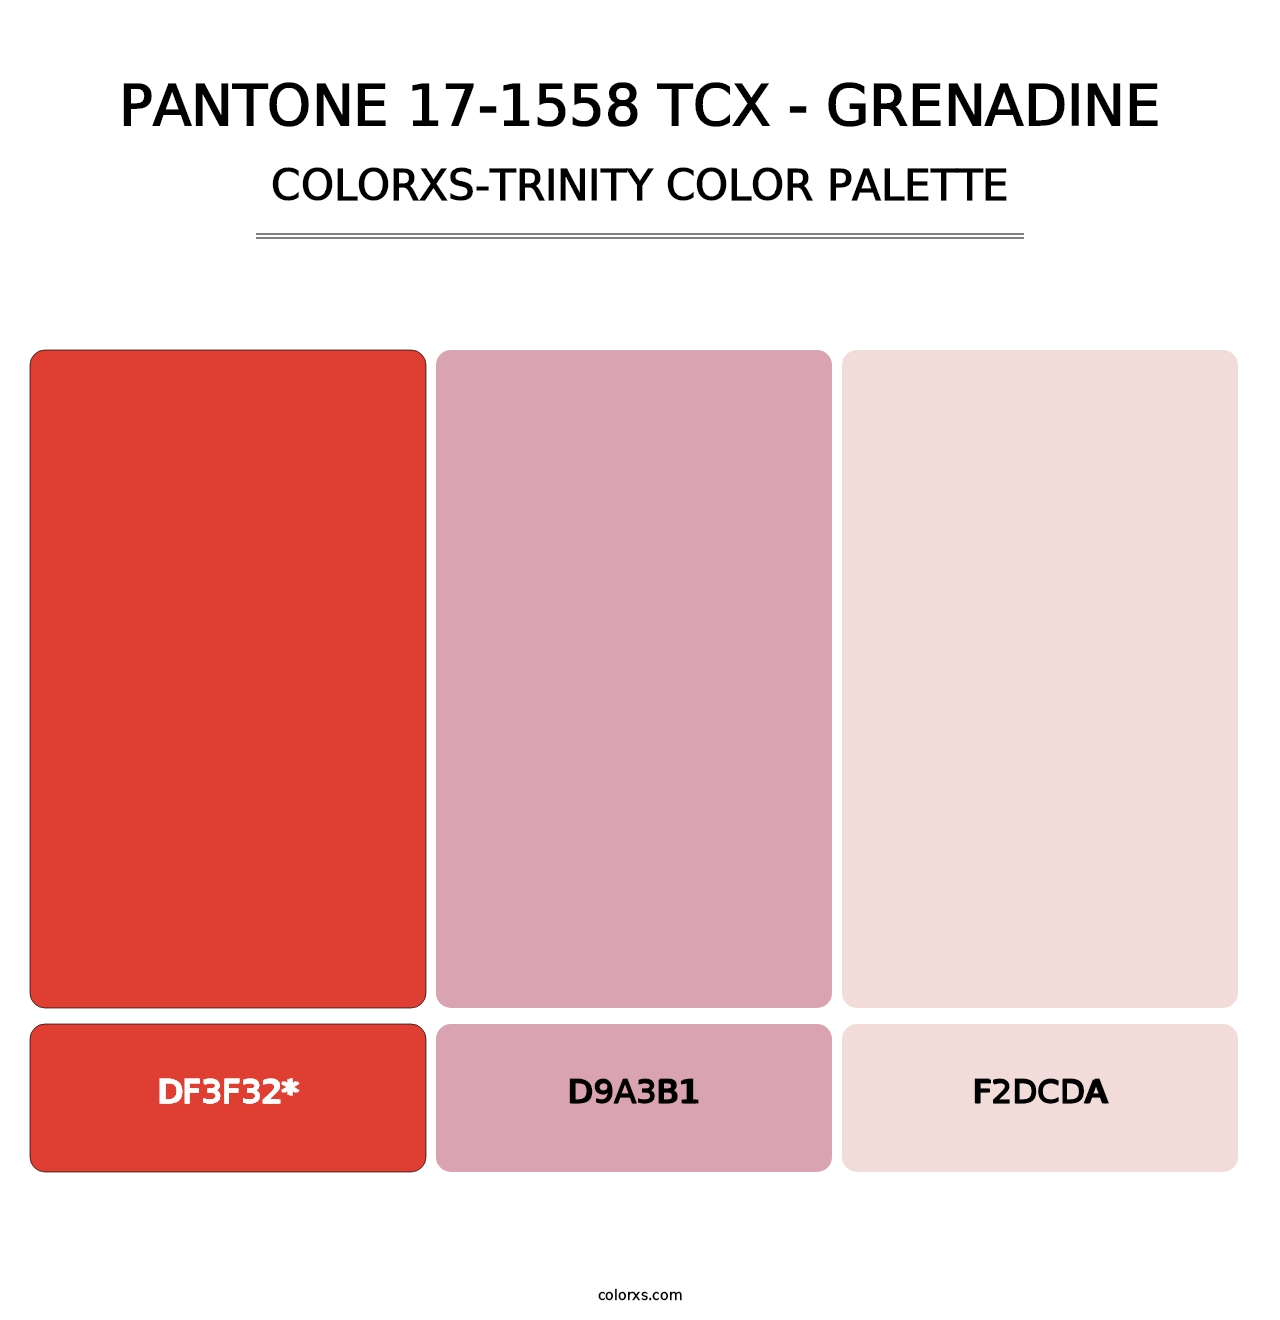 PANTONE 17-1558 TCX - Grenadine - Colorxs Trinity Palette